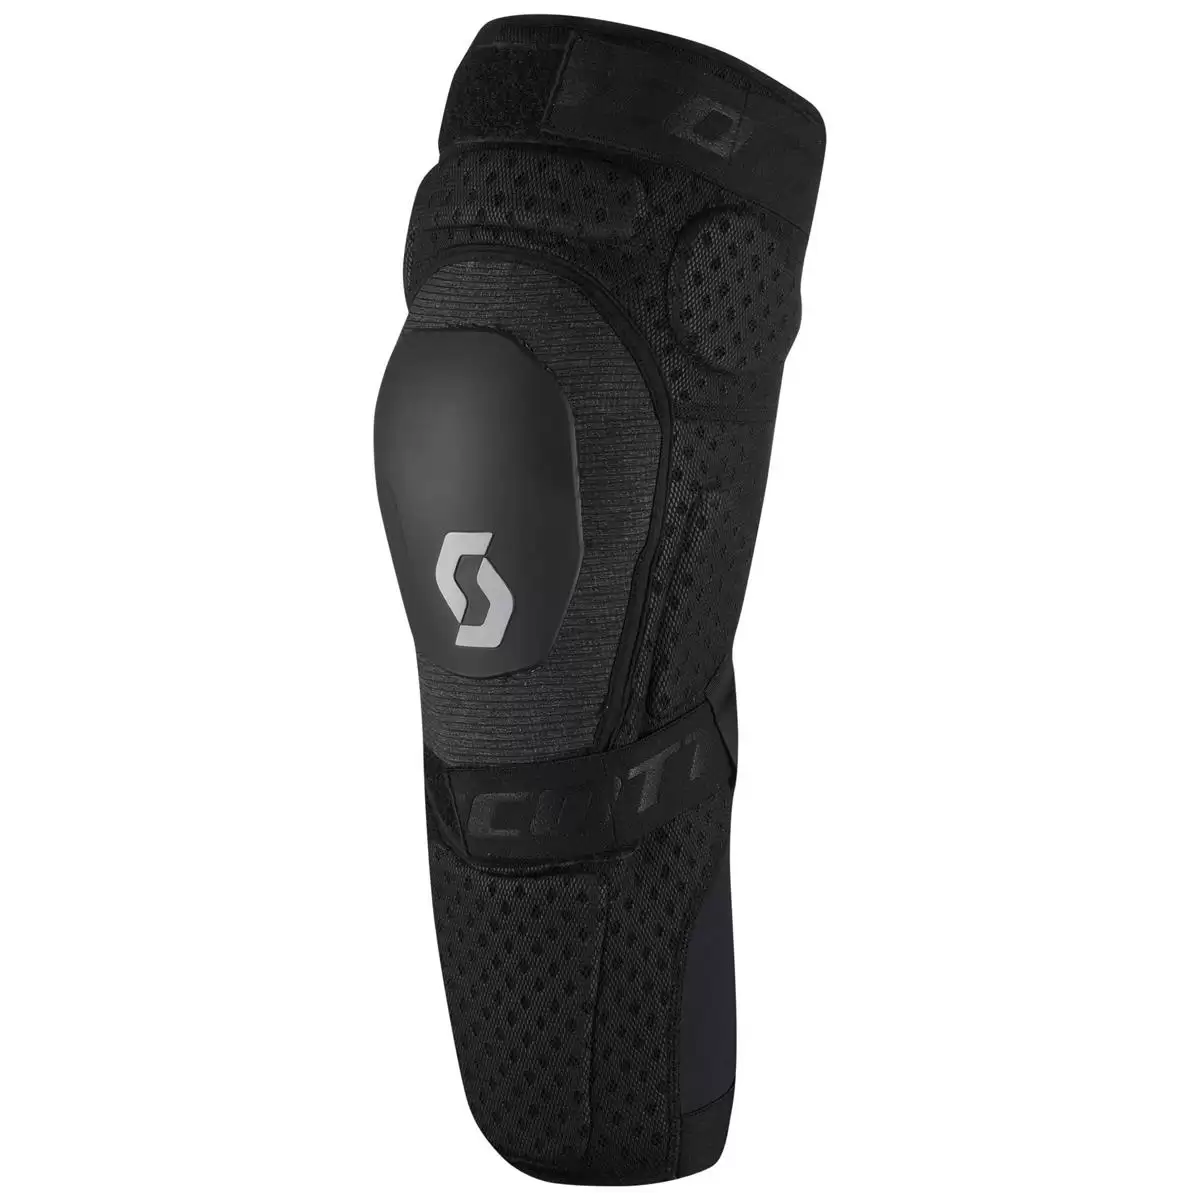 Knee Guard Softcon Hybrid Black - Size M - image